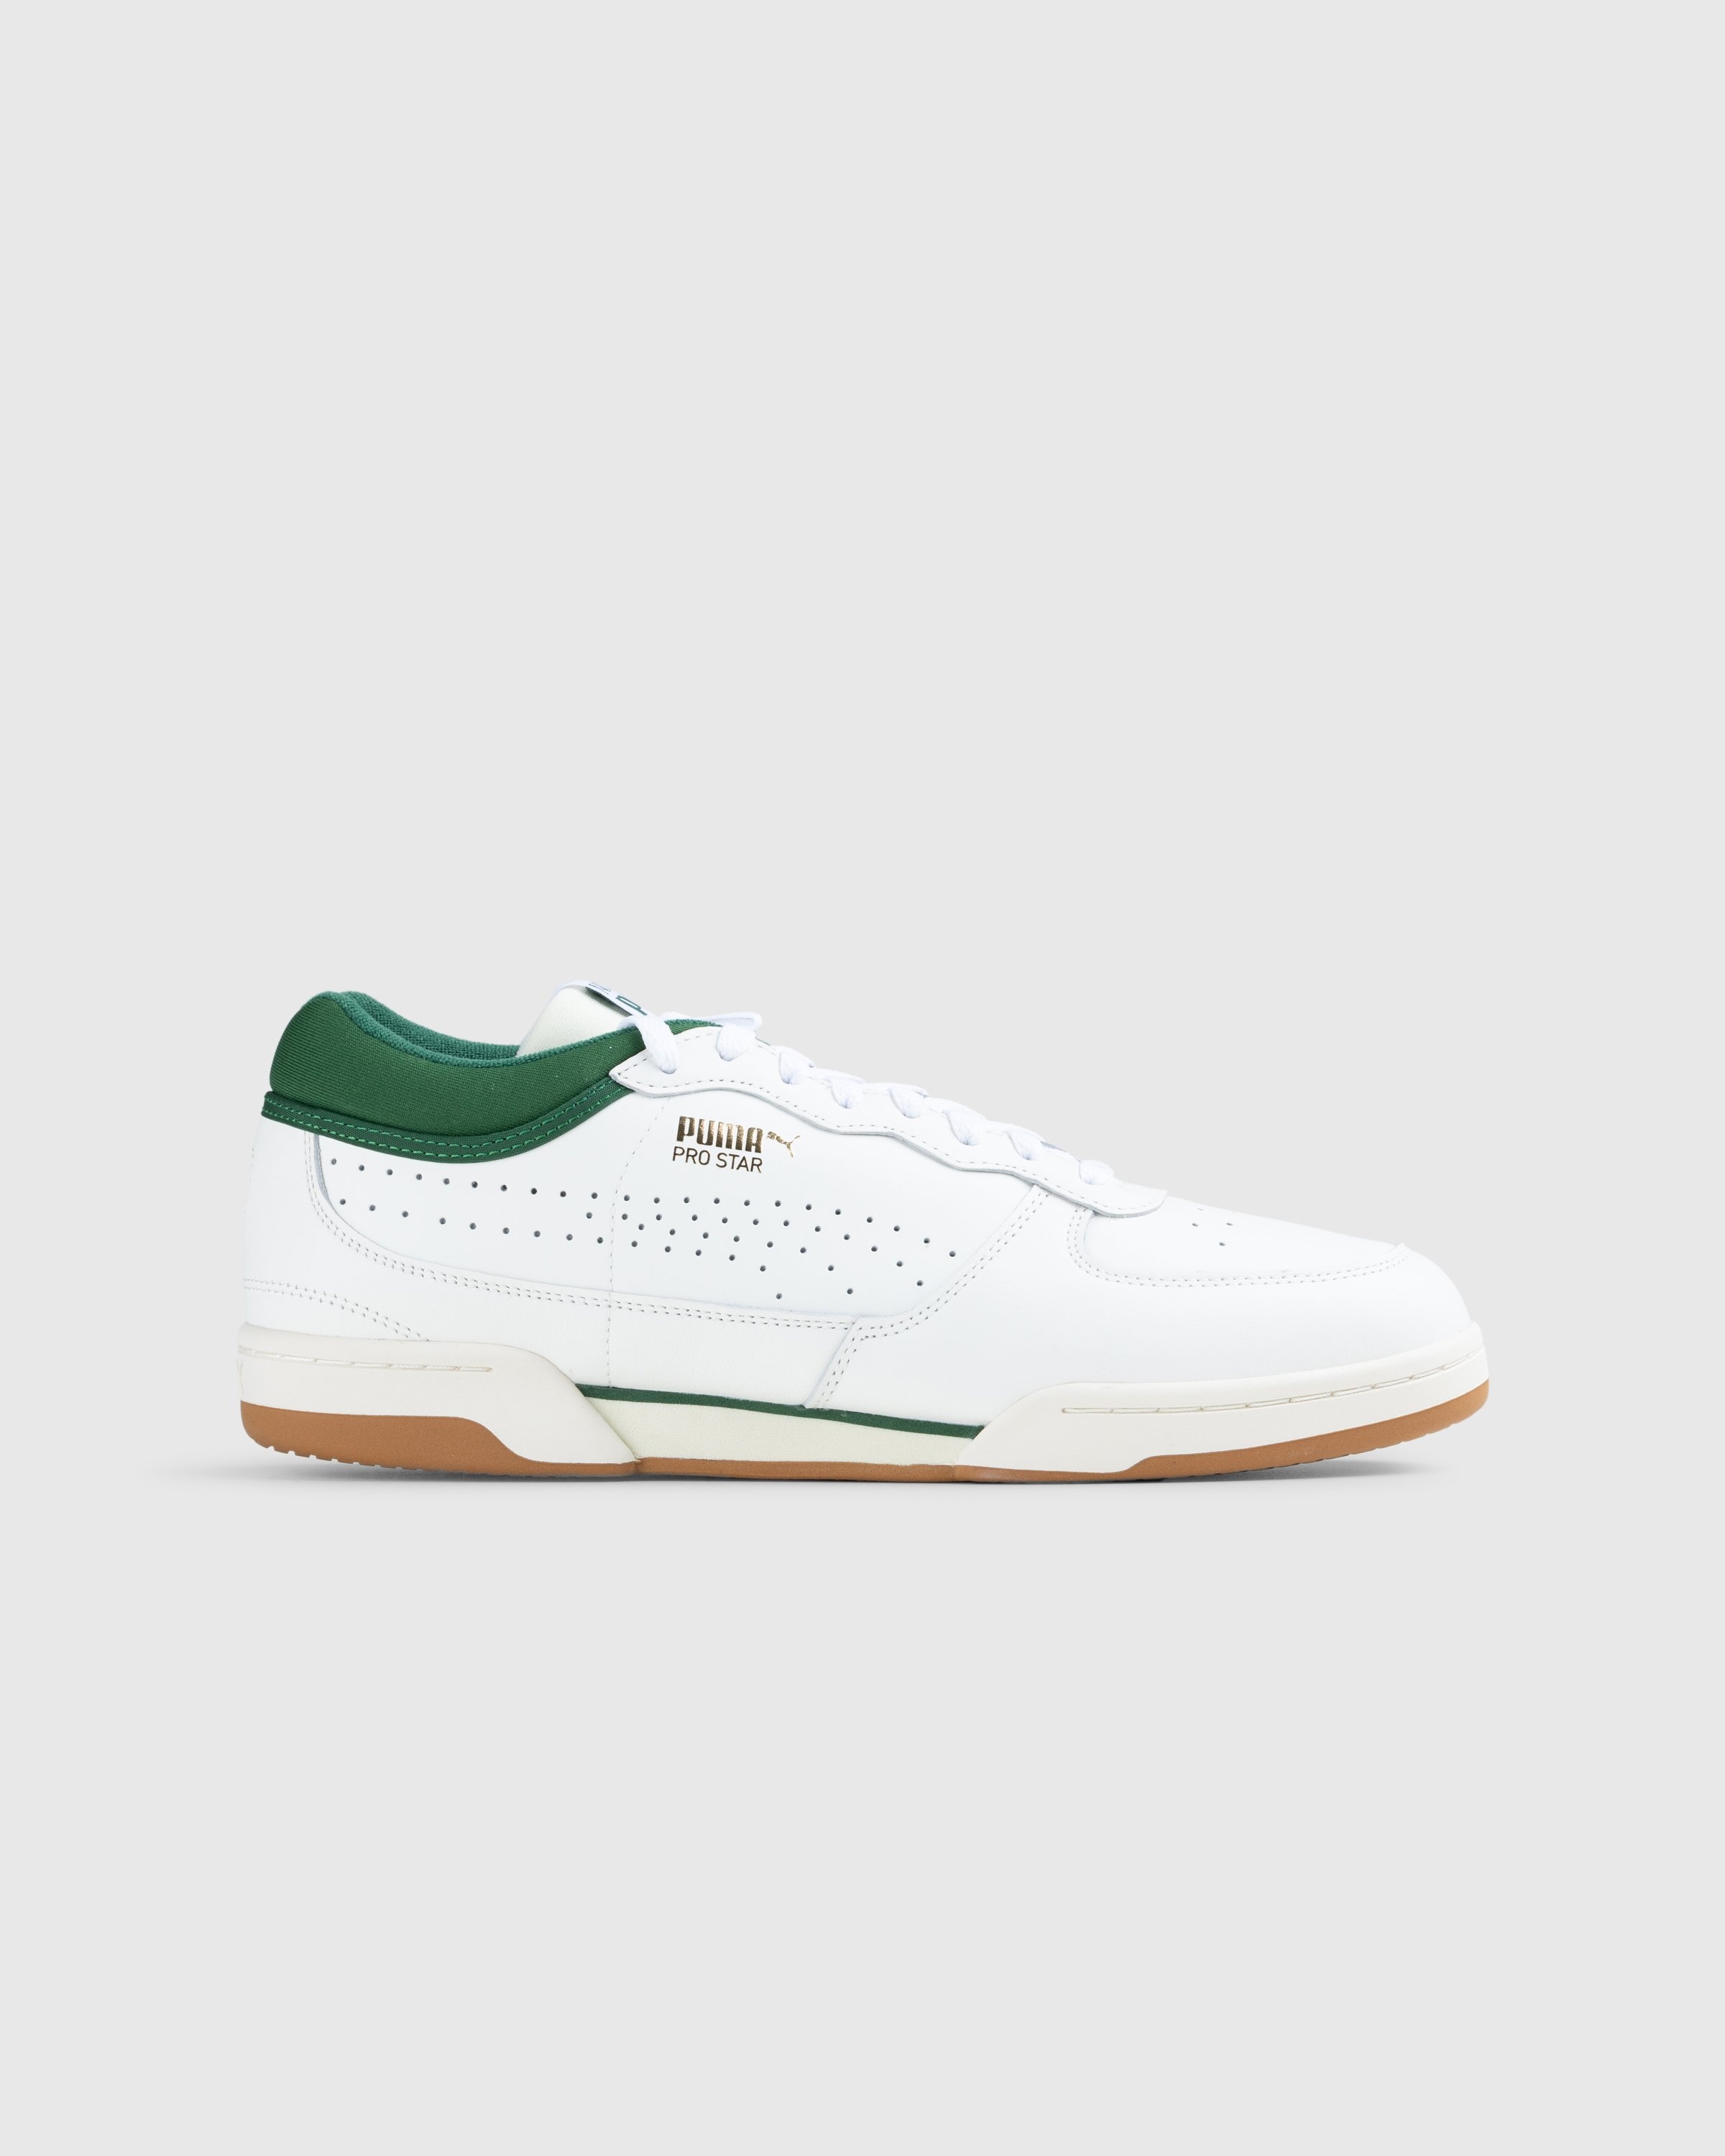 Puma x Noah – Pro Star White/Green - Sneakers - Multi - Image 1